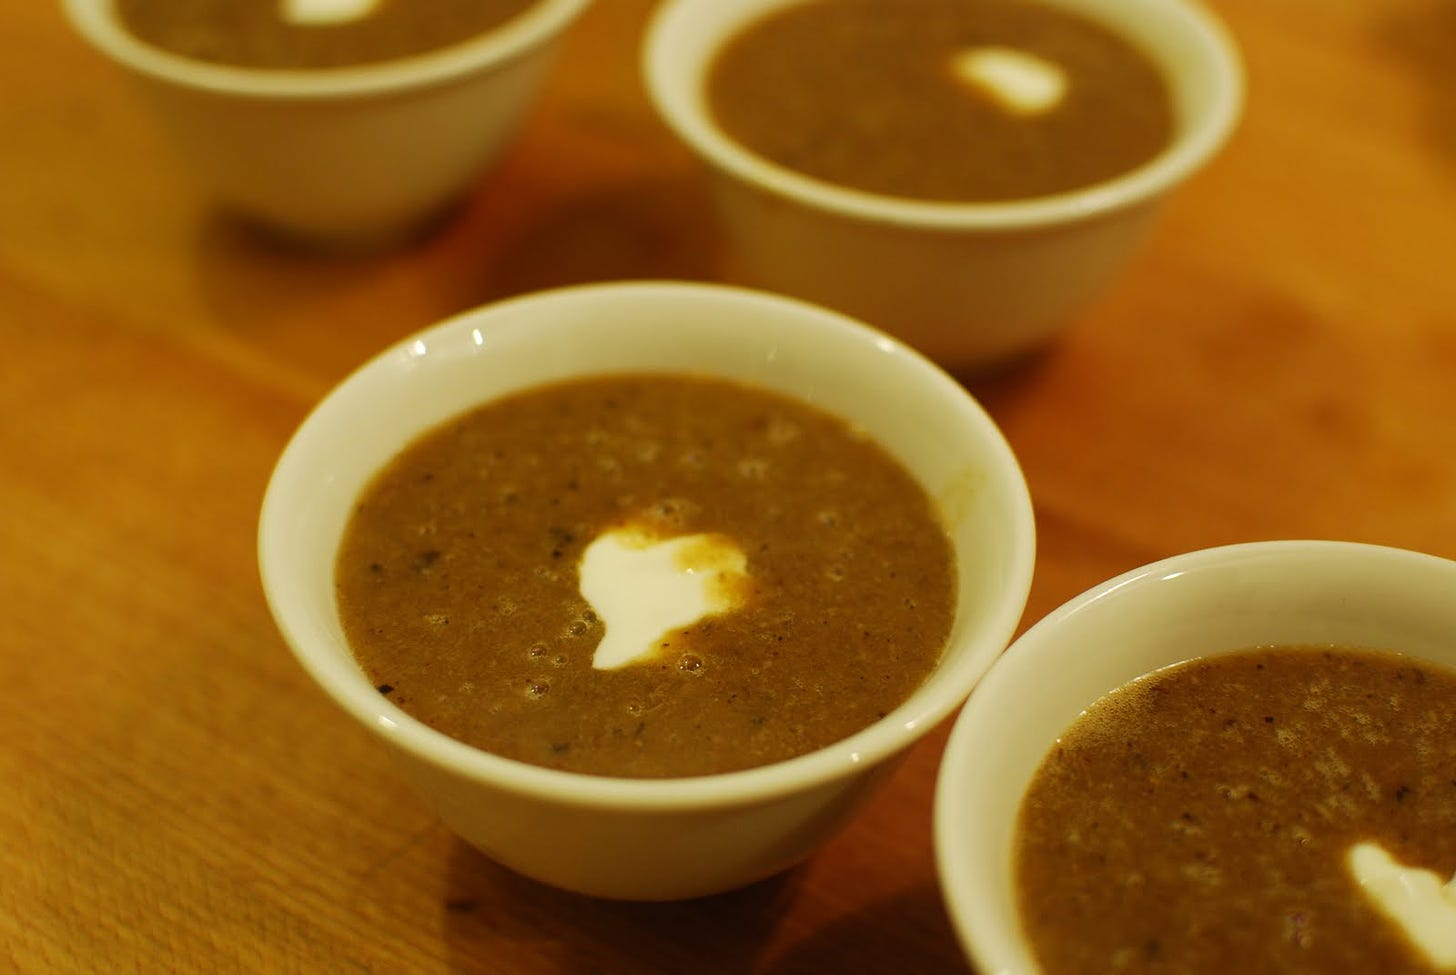 Essex Eating: Brown Windsor soup - A revival